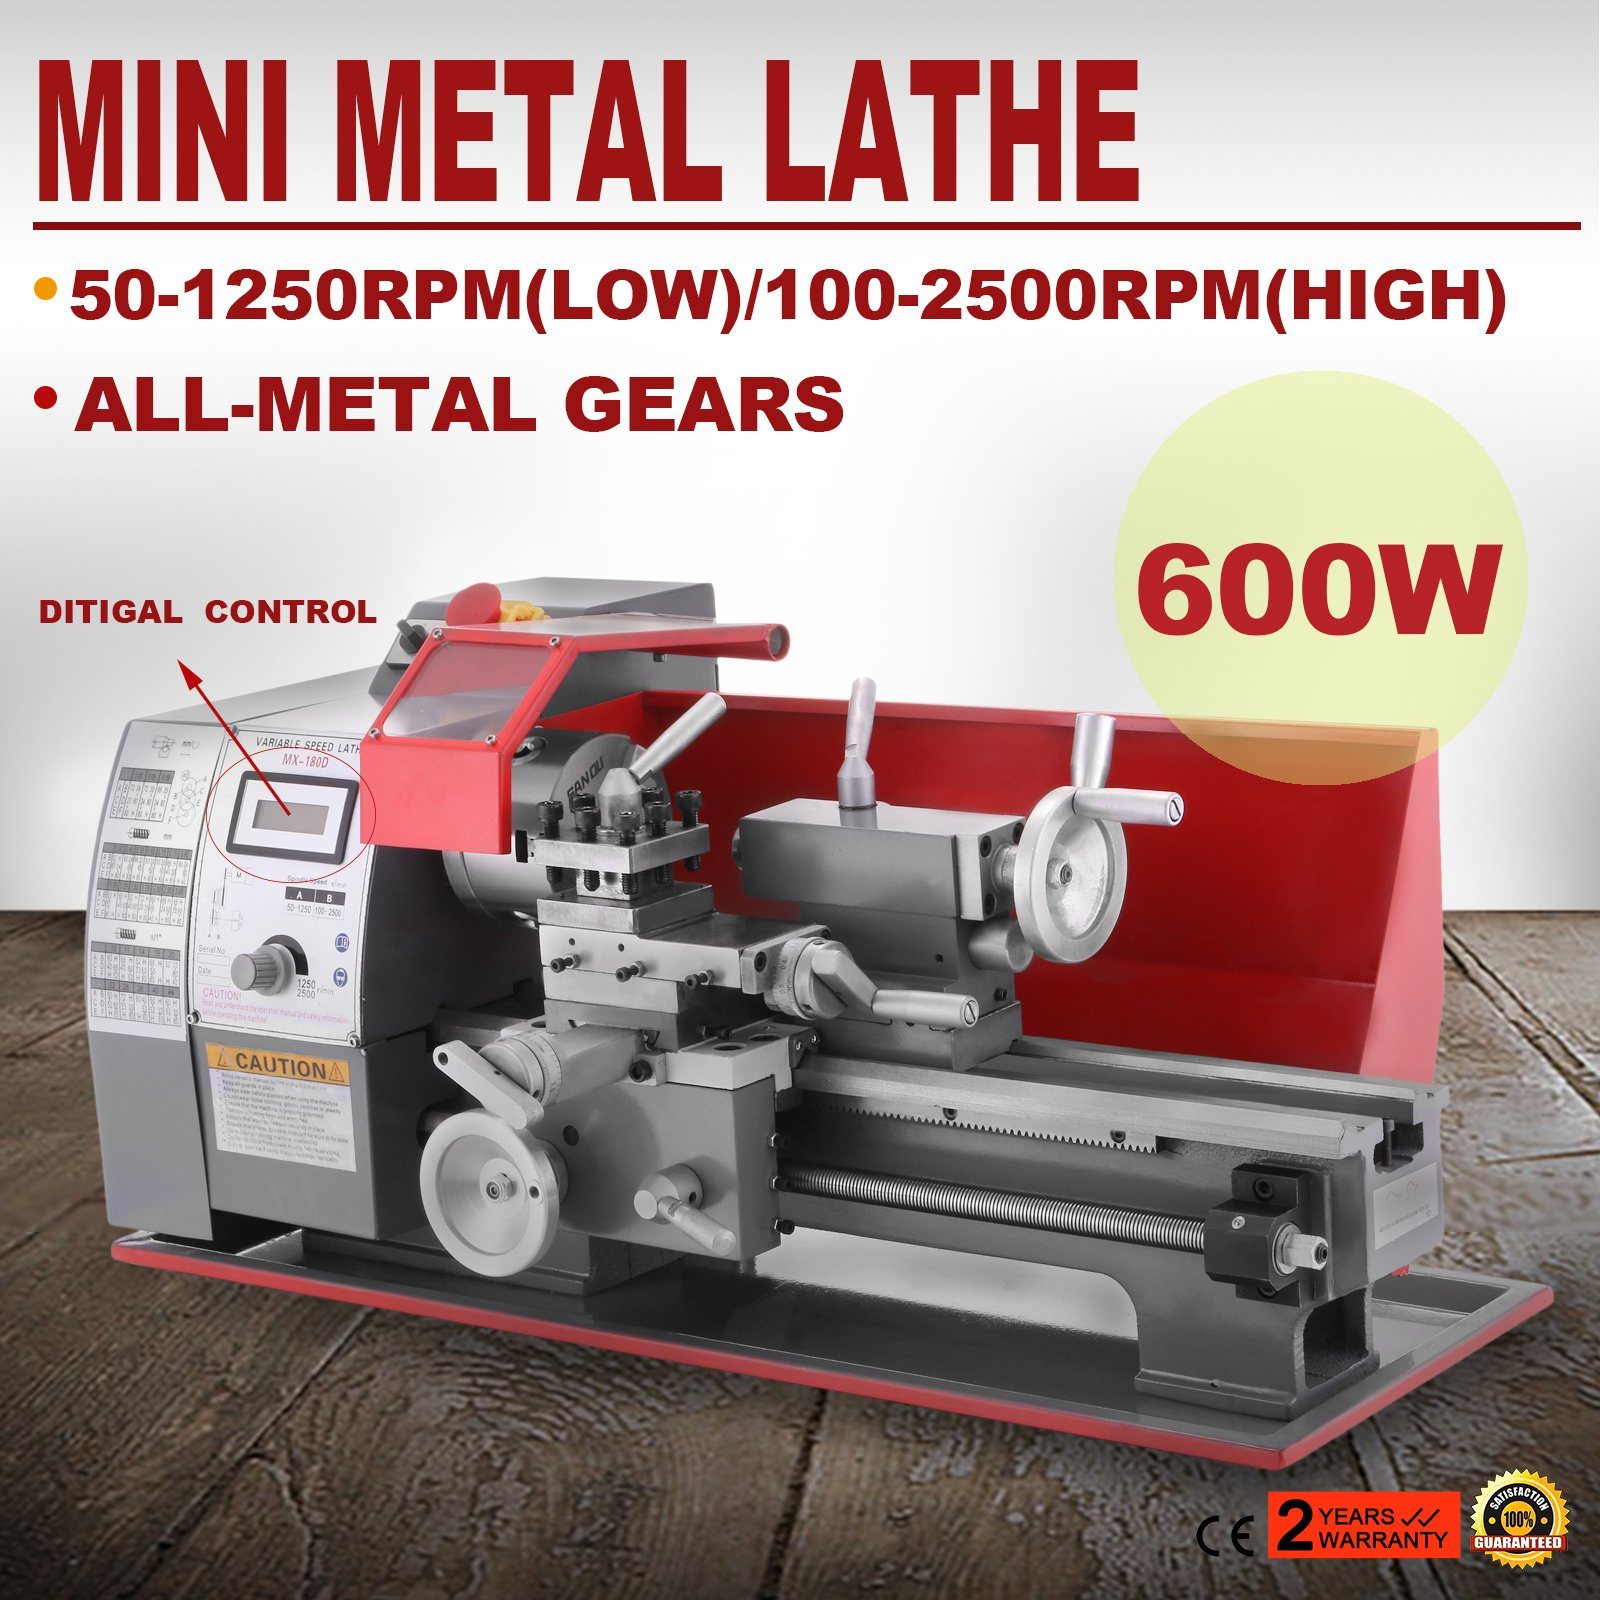 CNC Lathe Wood Construction 180 Model 600W Bench Mini Metal Lathe Machine